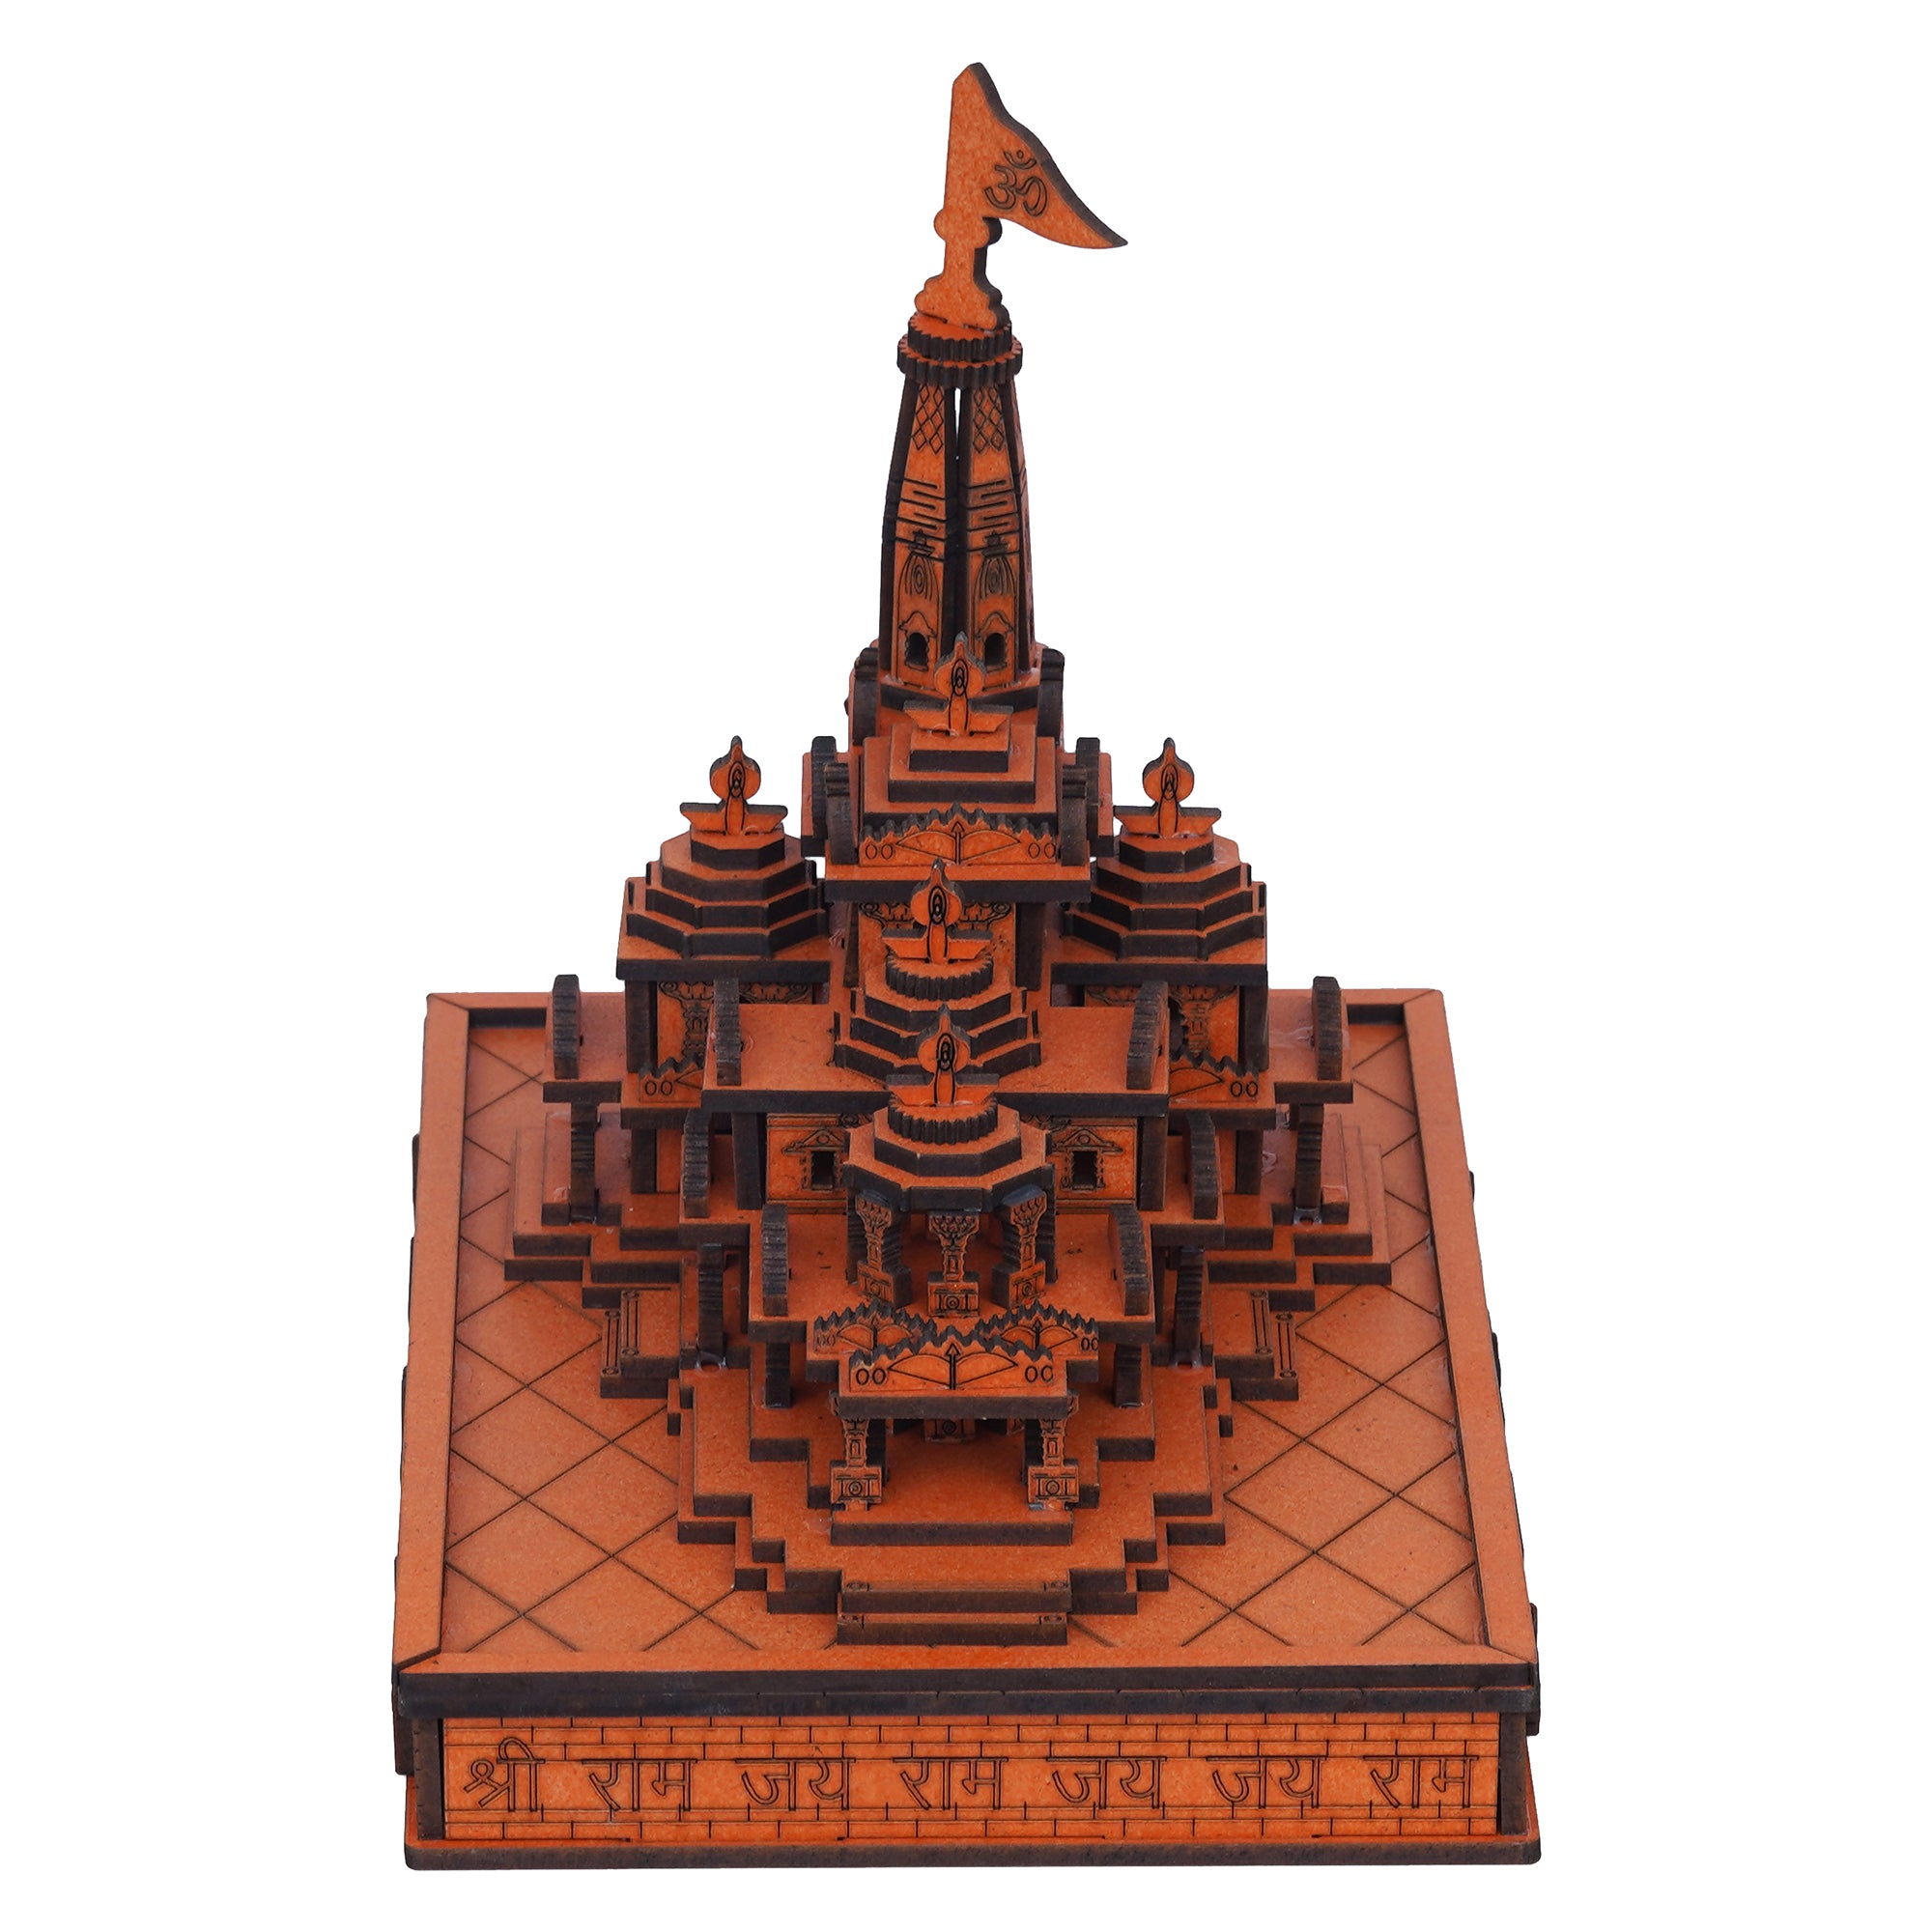 eCraftIndia Shri Ram Mandir Ayodhya Model - Wooden MDF Craftsmanship Authentic Designer Temple - Ideal for Home Temple, Decor, and Spiritual Gifting (Orange) 7